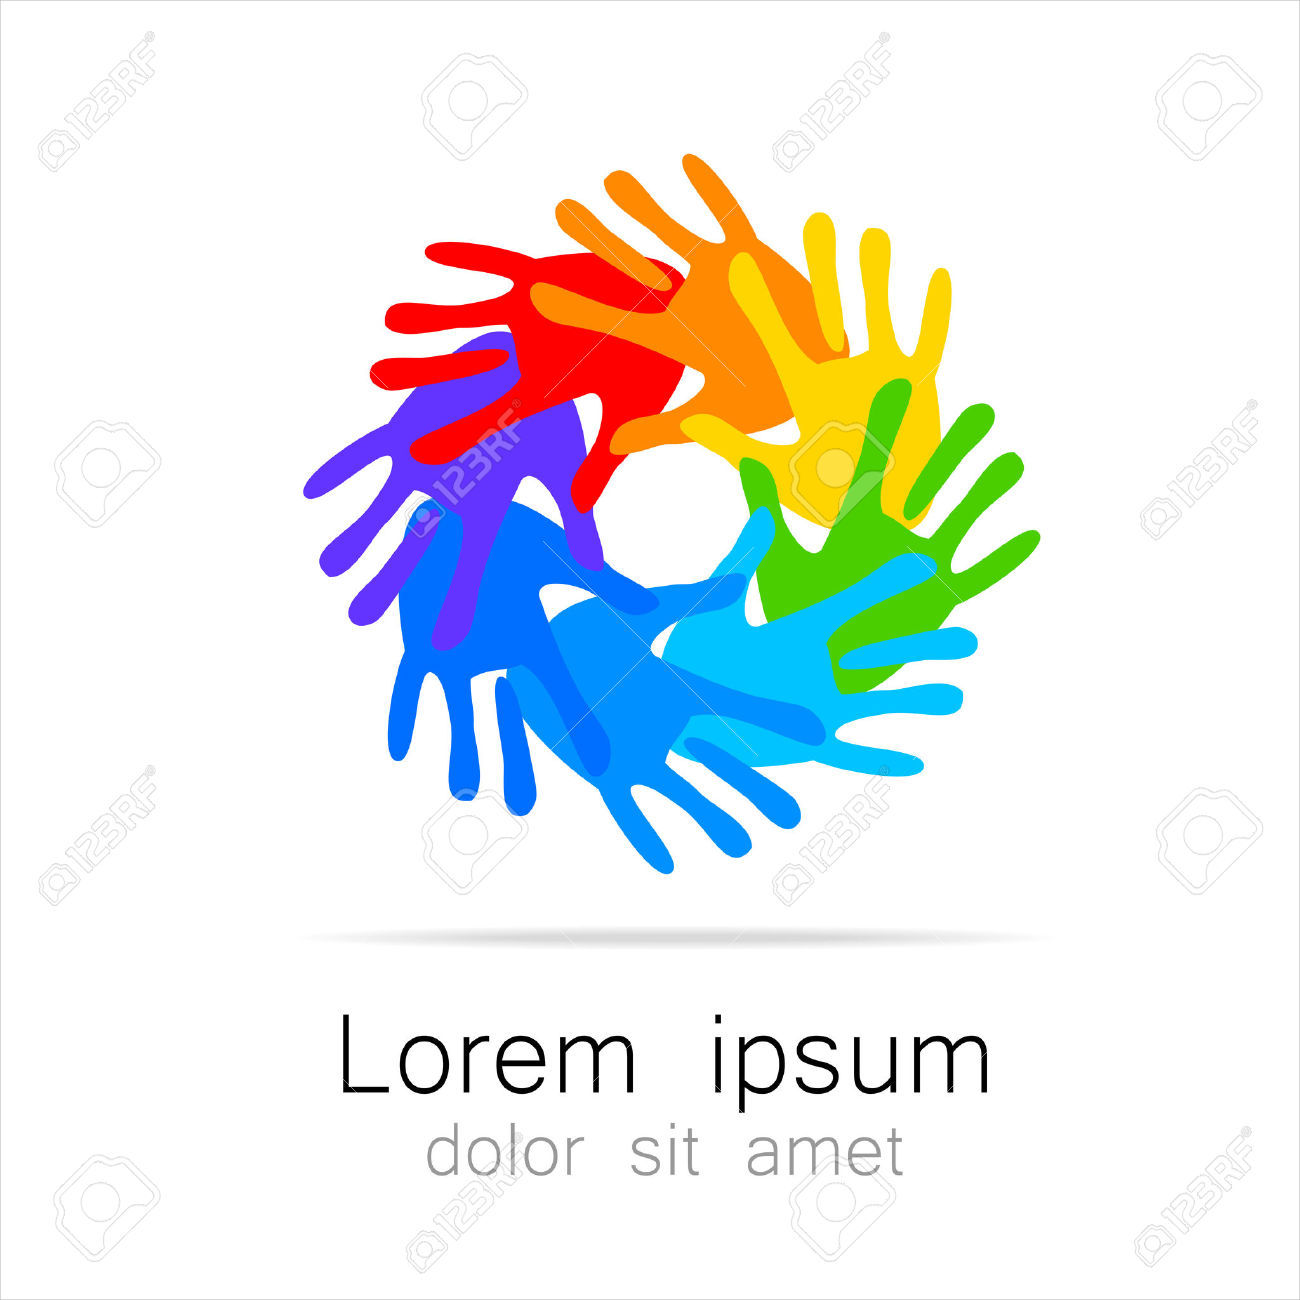 community service logo vector